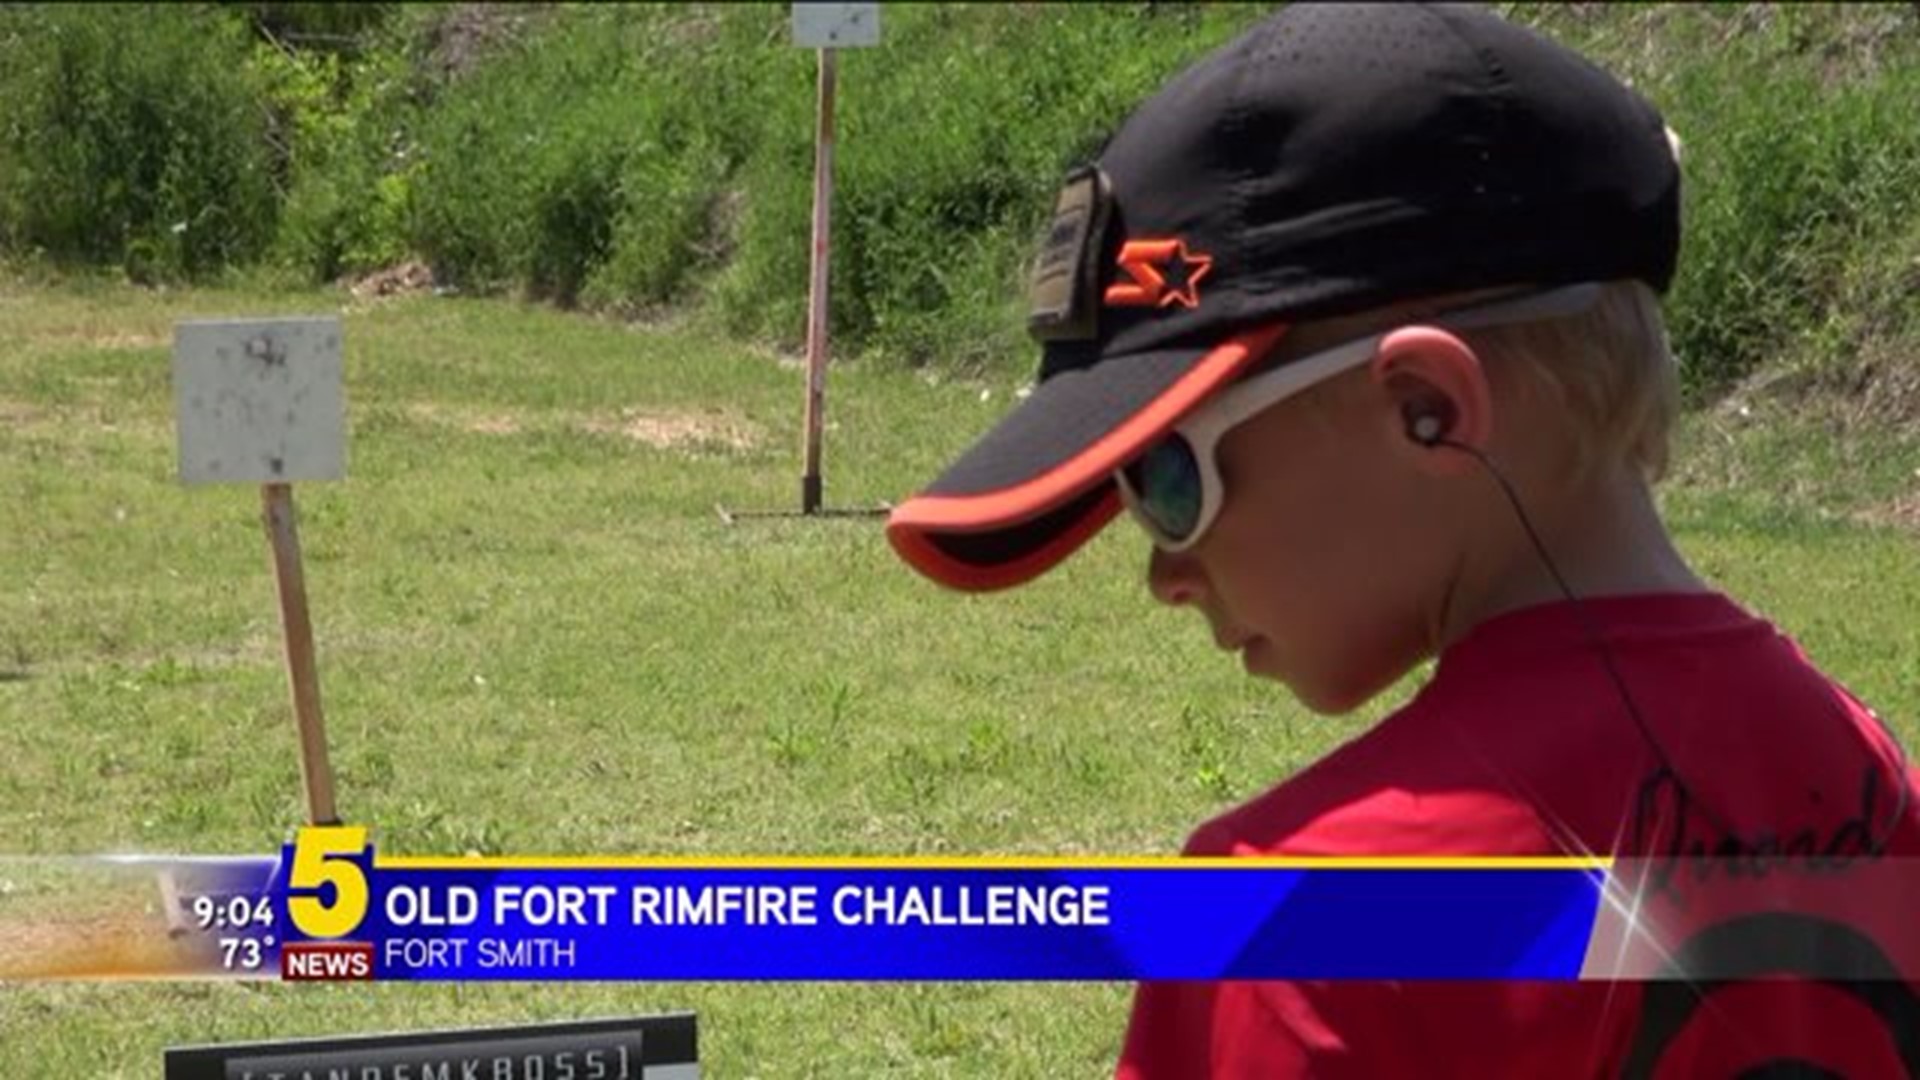 Old Fort Rimfire Challenge